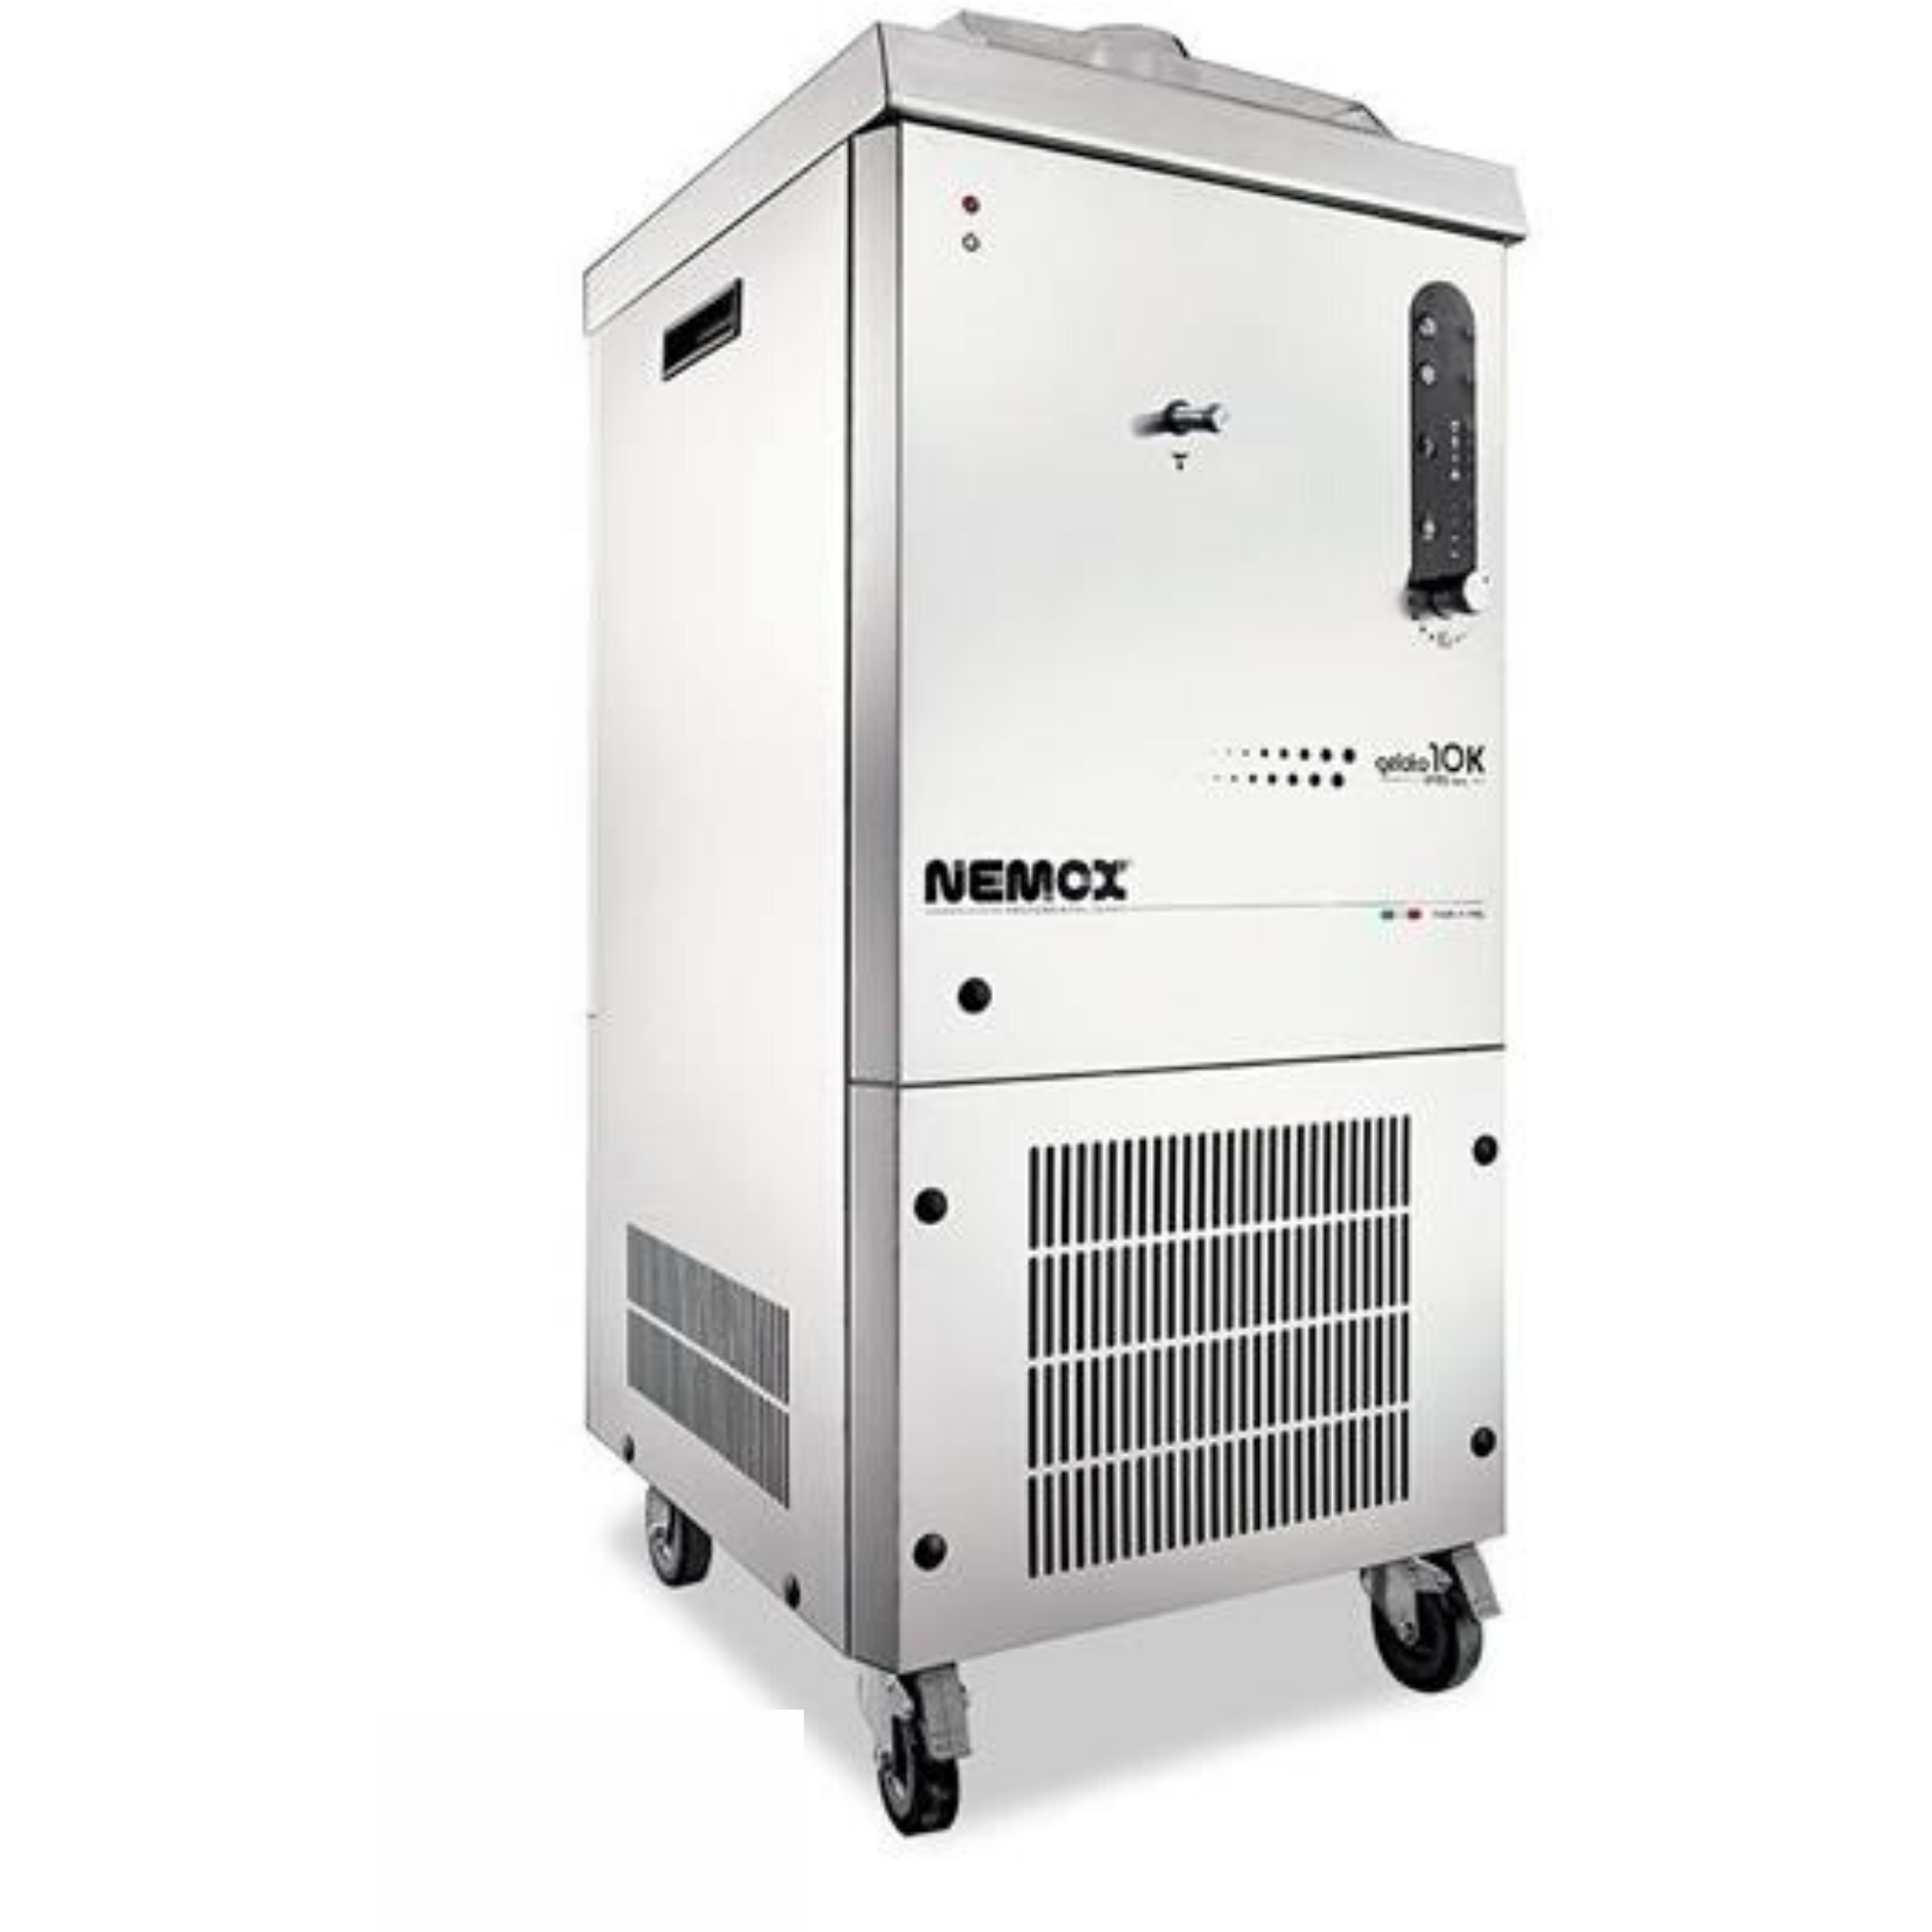 Demonstration & Usage of the Nemox Gelato 12K Professional Ice Cream Machine  